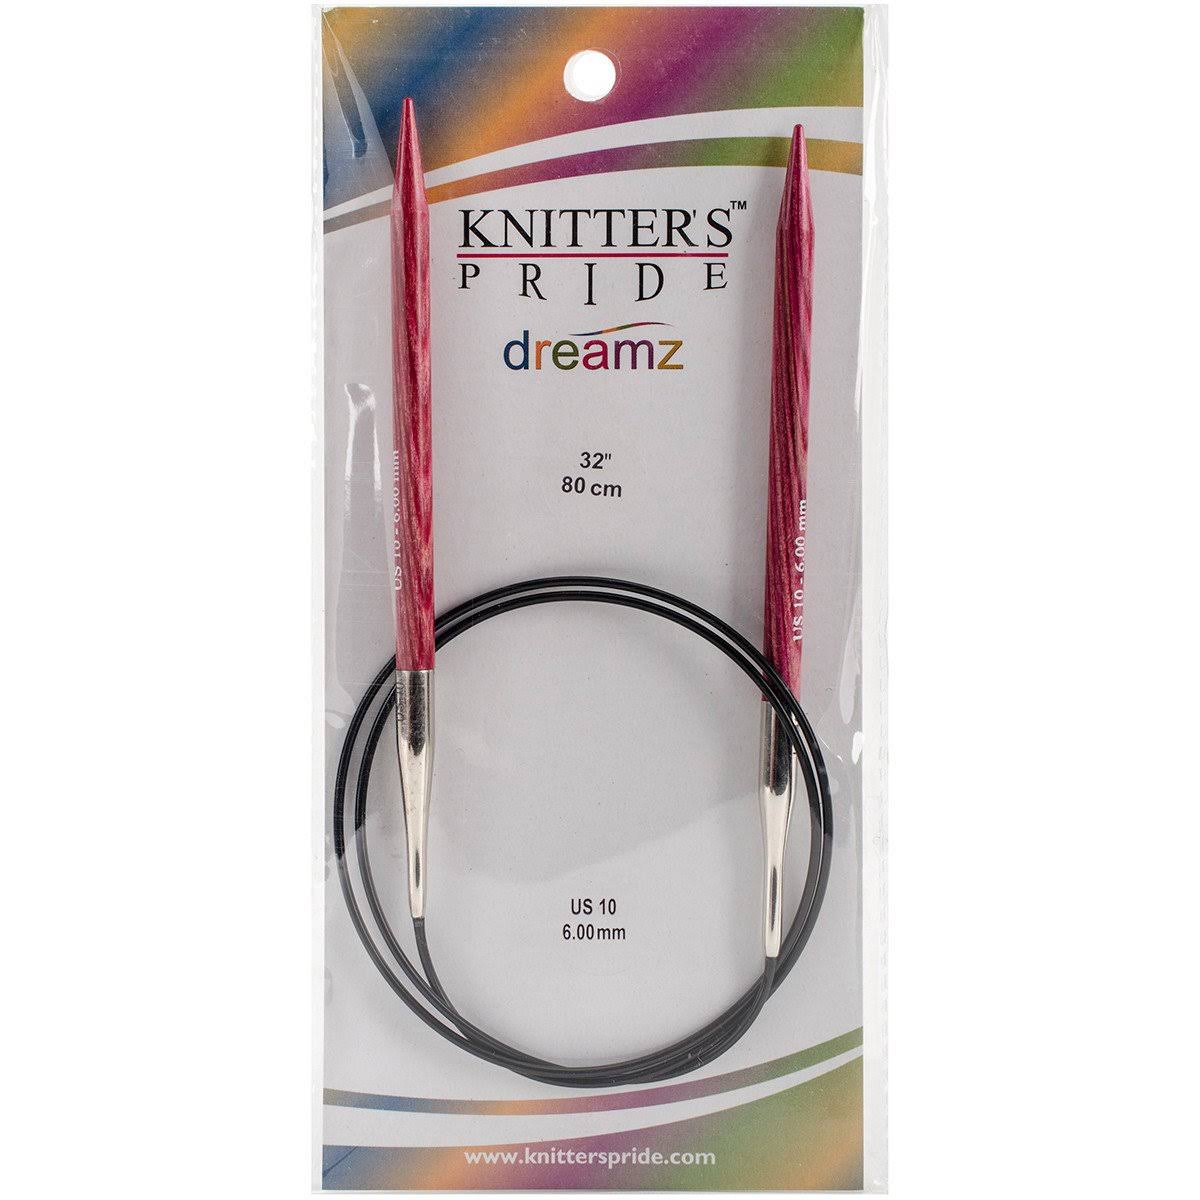 Knitters Pride Dreamz Circular Knitting Needles Size 10 (6mm), 32"